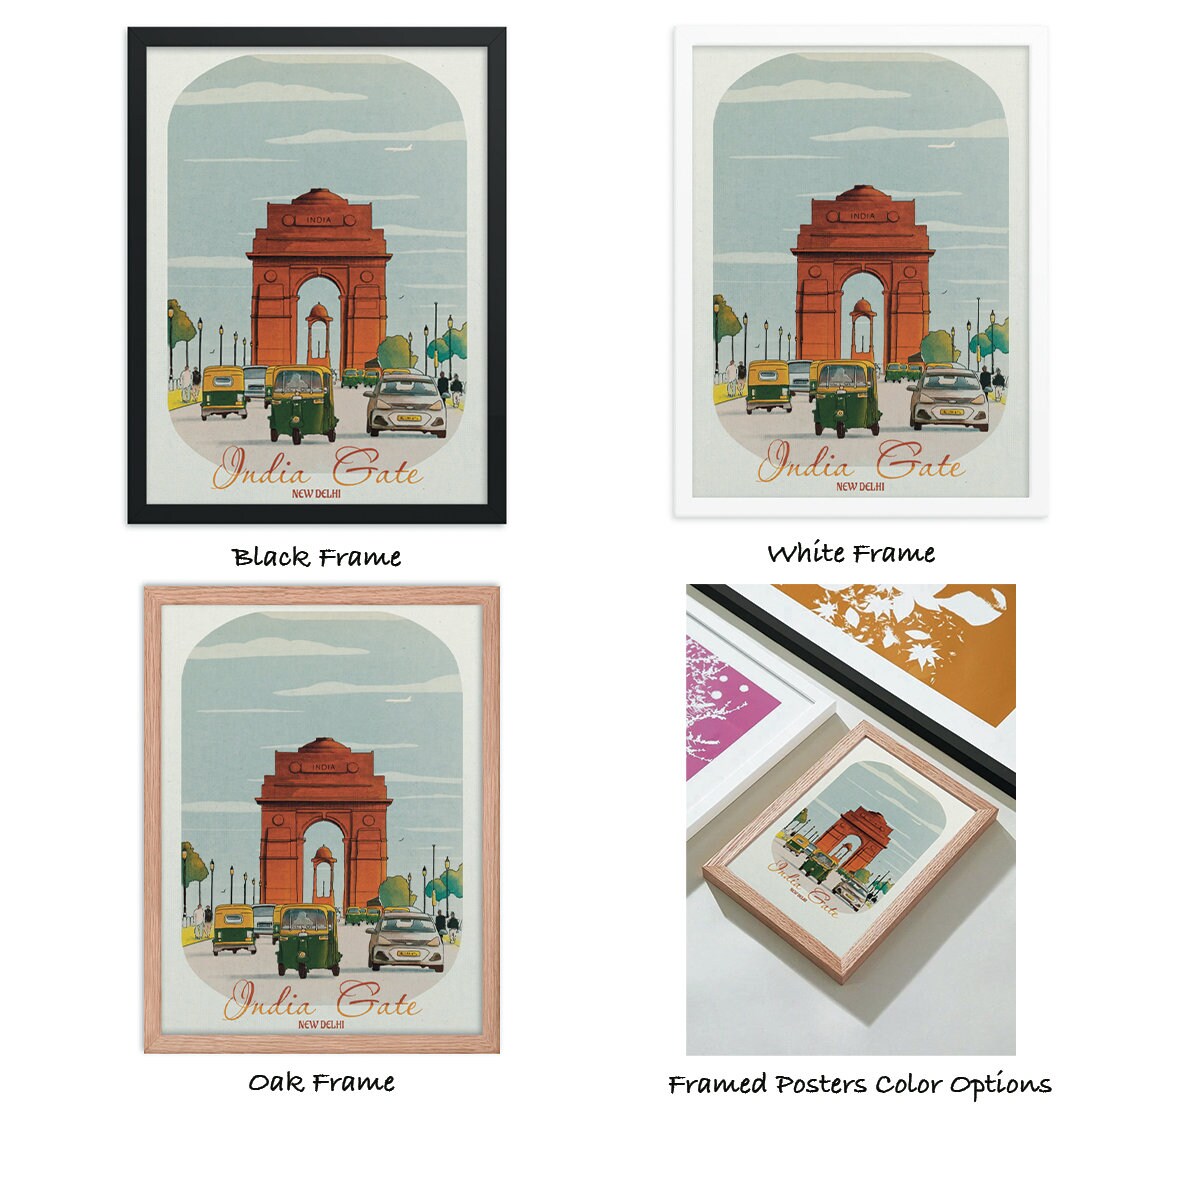 India Gate, New Delhi India Poster, Travel Art Prints & Posters